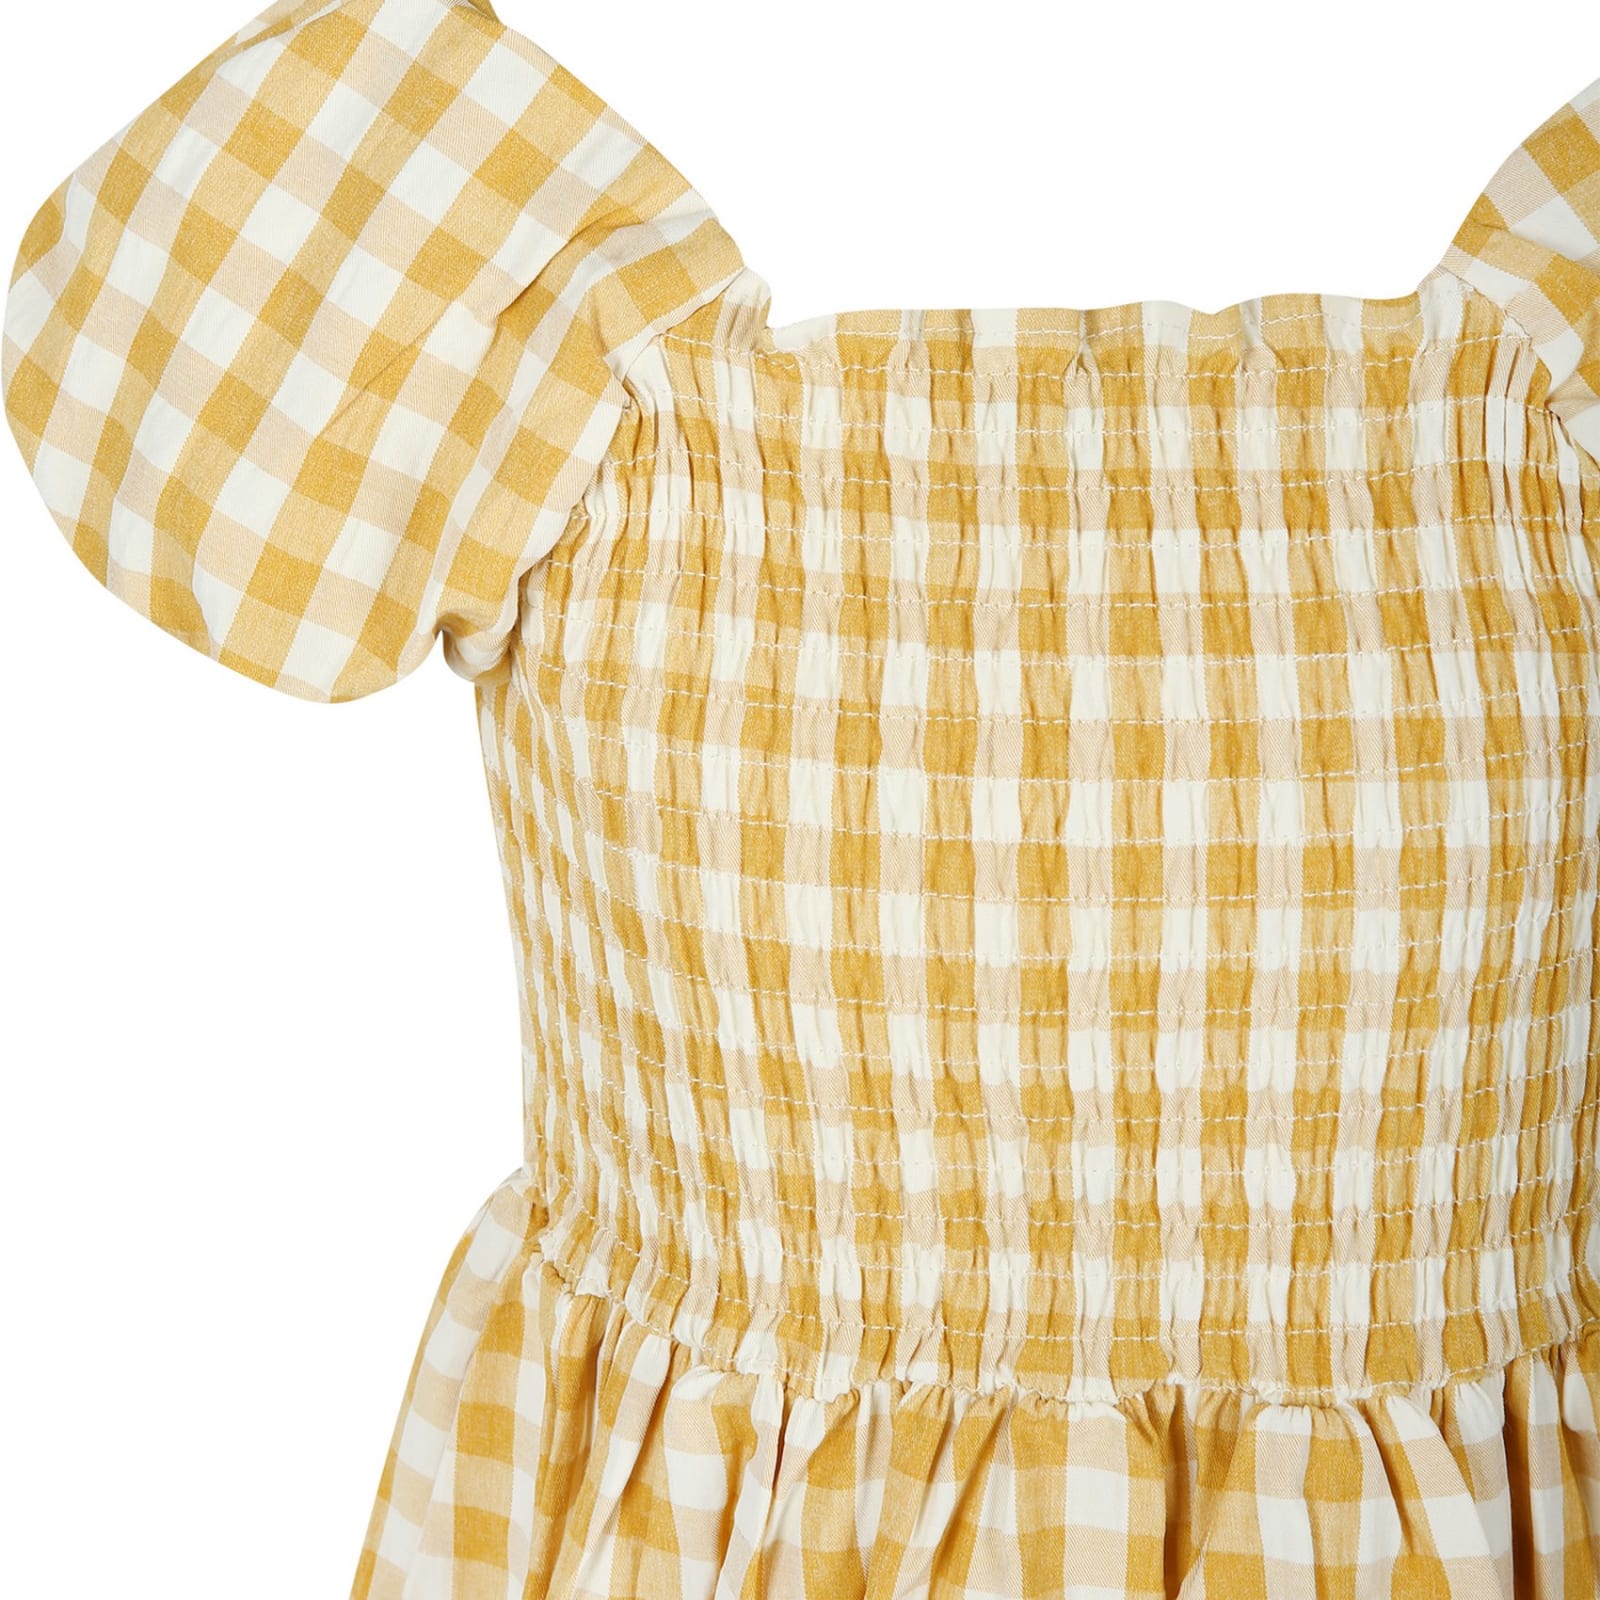 Shop Molo Casual Yellow Dress Cherisla For Girl